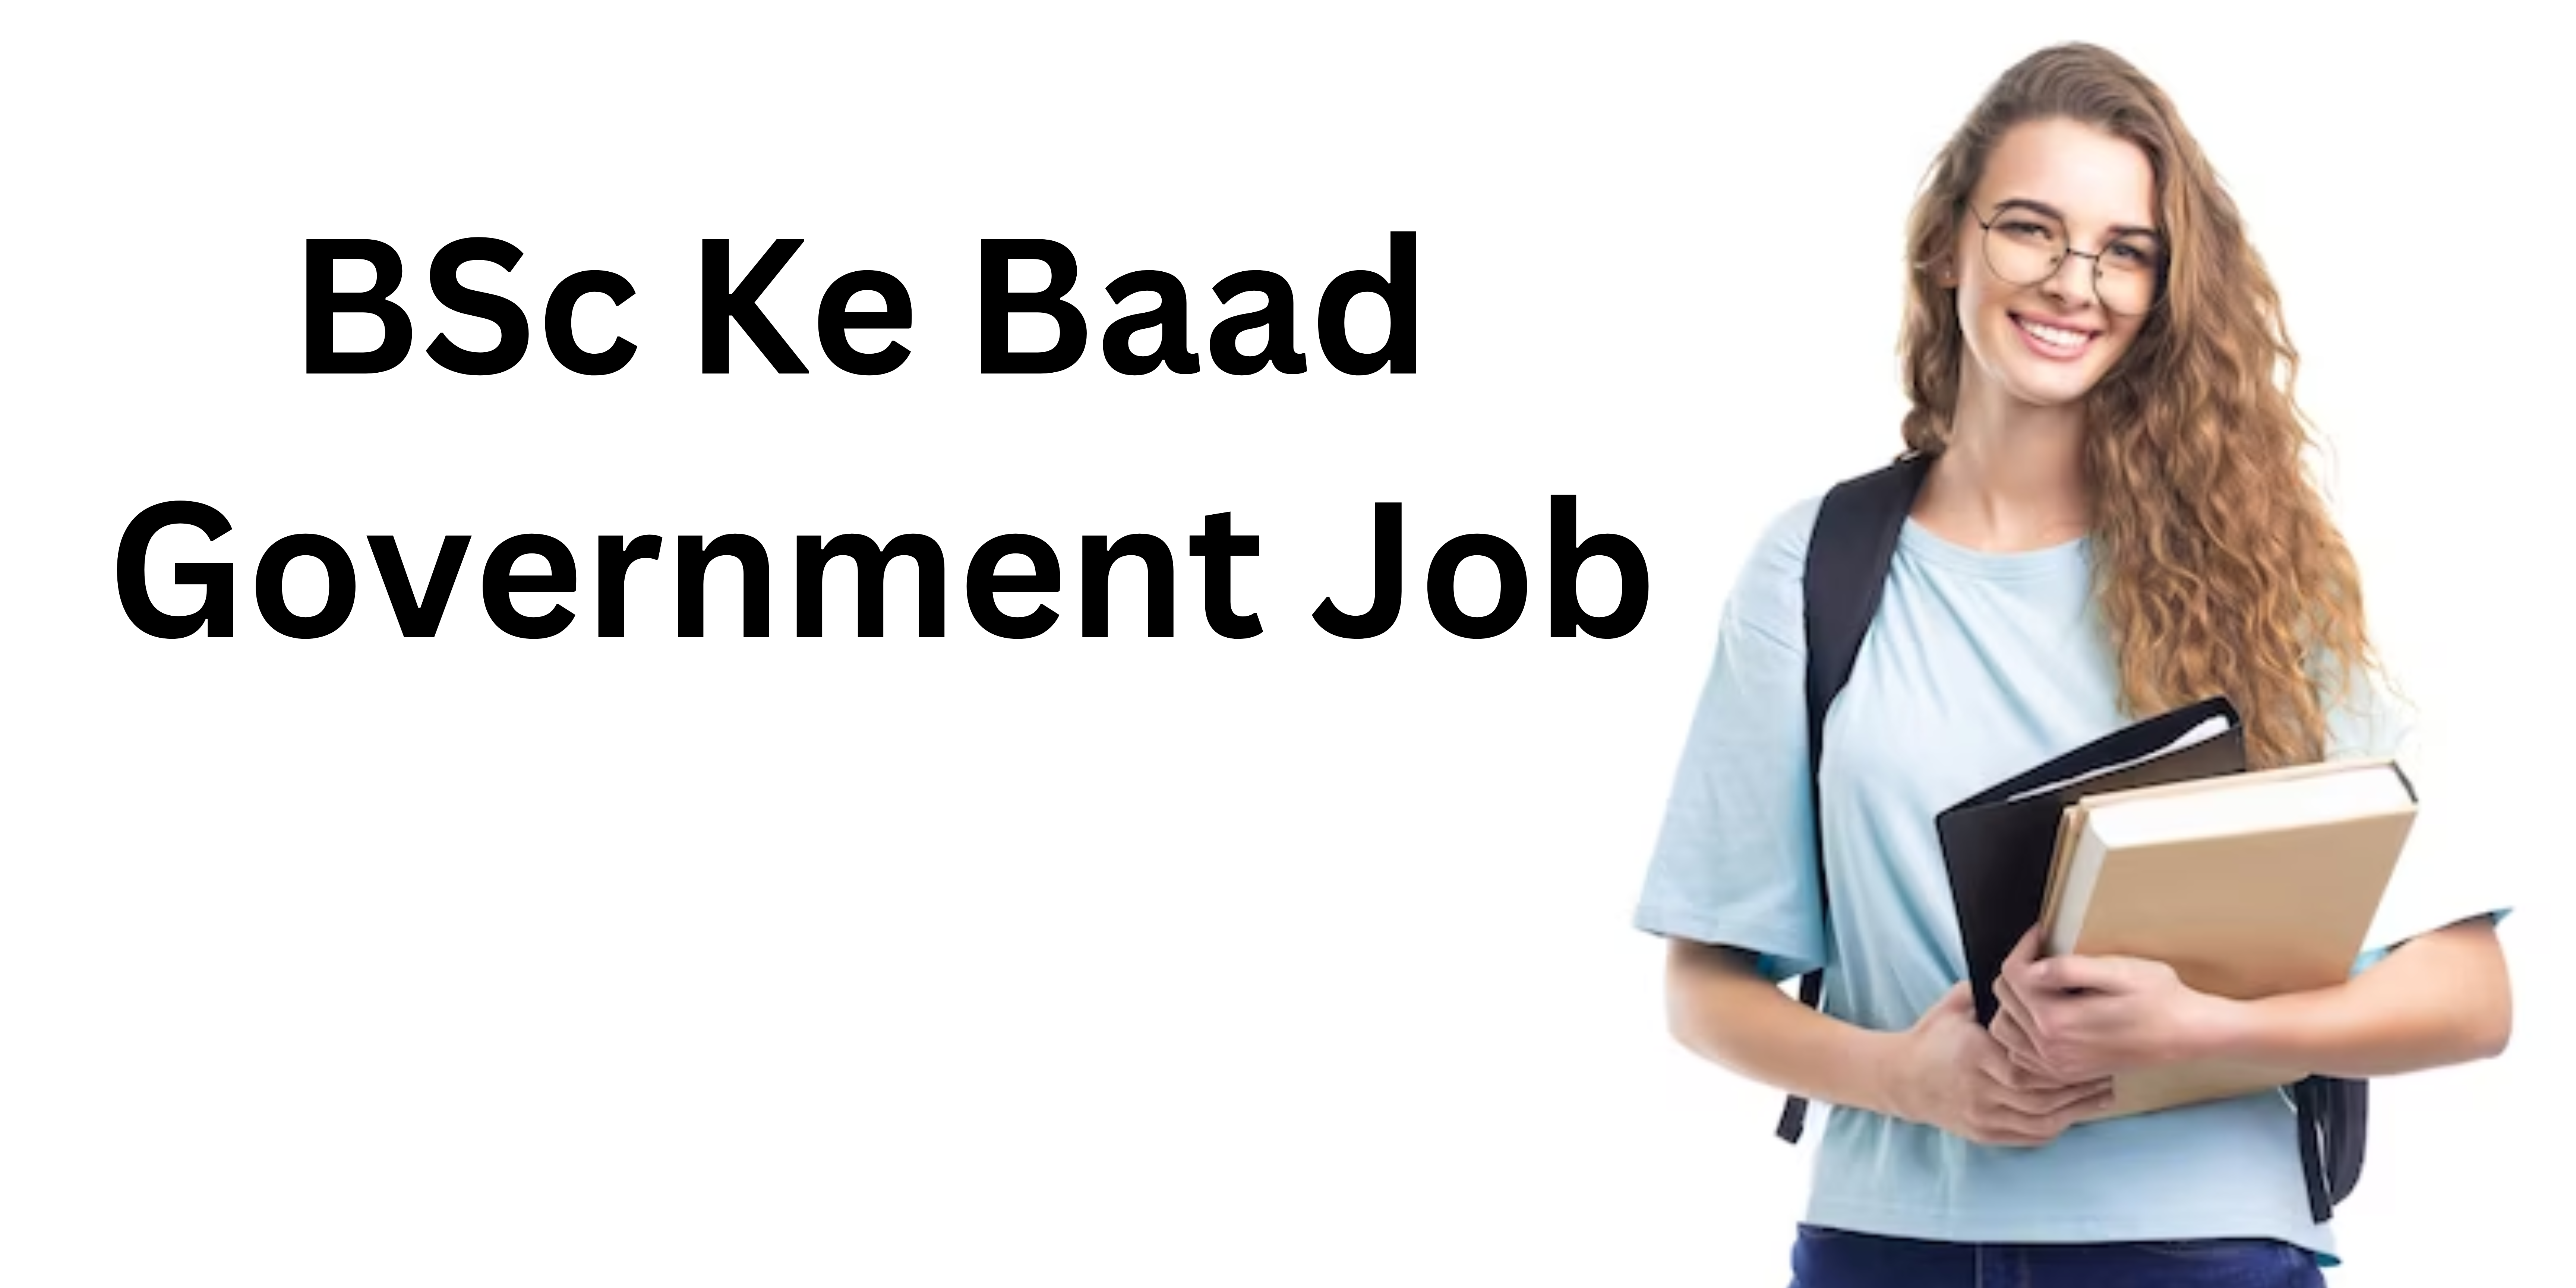 BSc Ke Baad Government Job